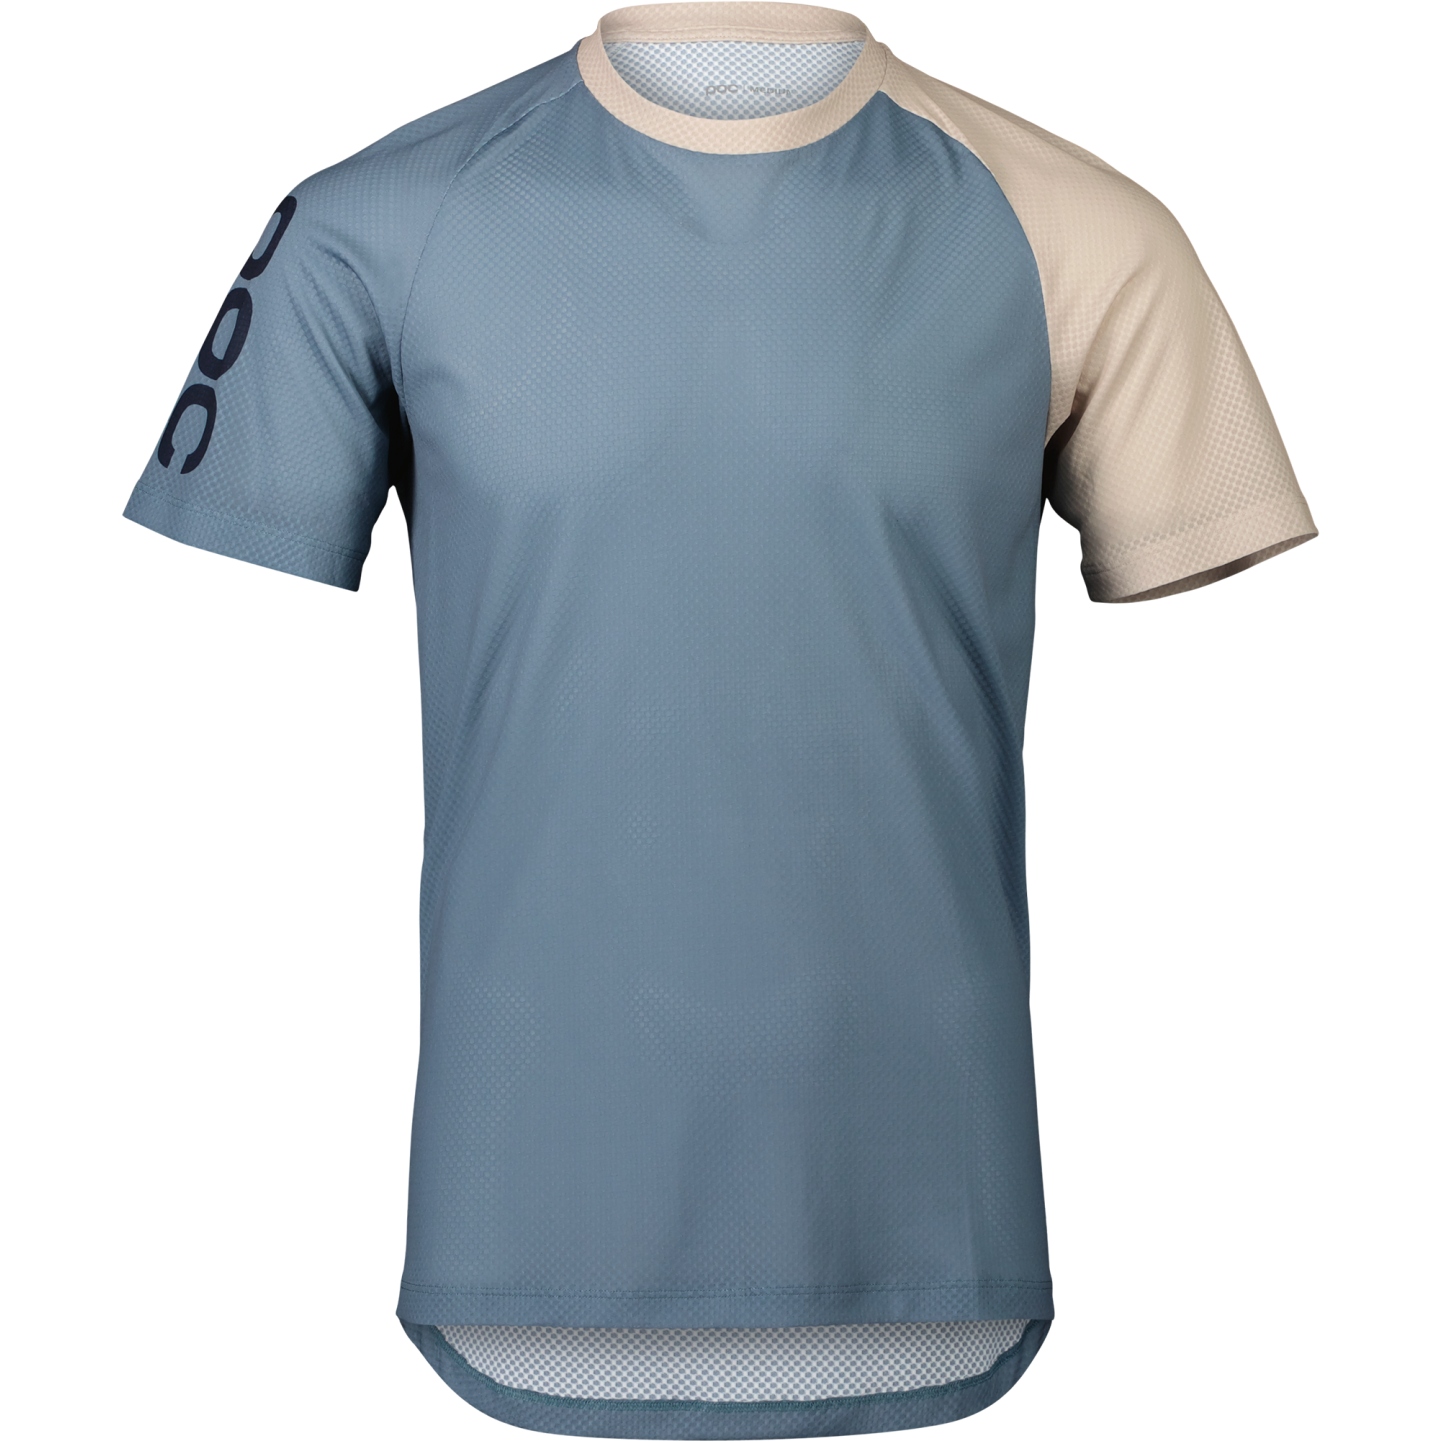 Productfoto van POC MTB Pure Shirt Heren - 8522 Calcite Blue/Light Sandstone Beige